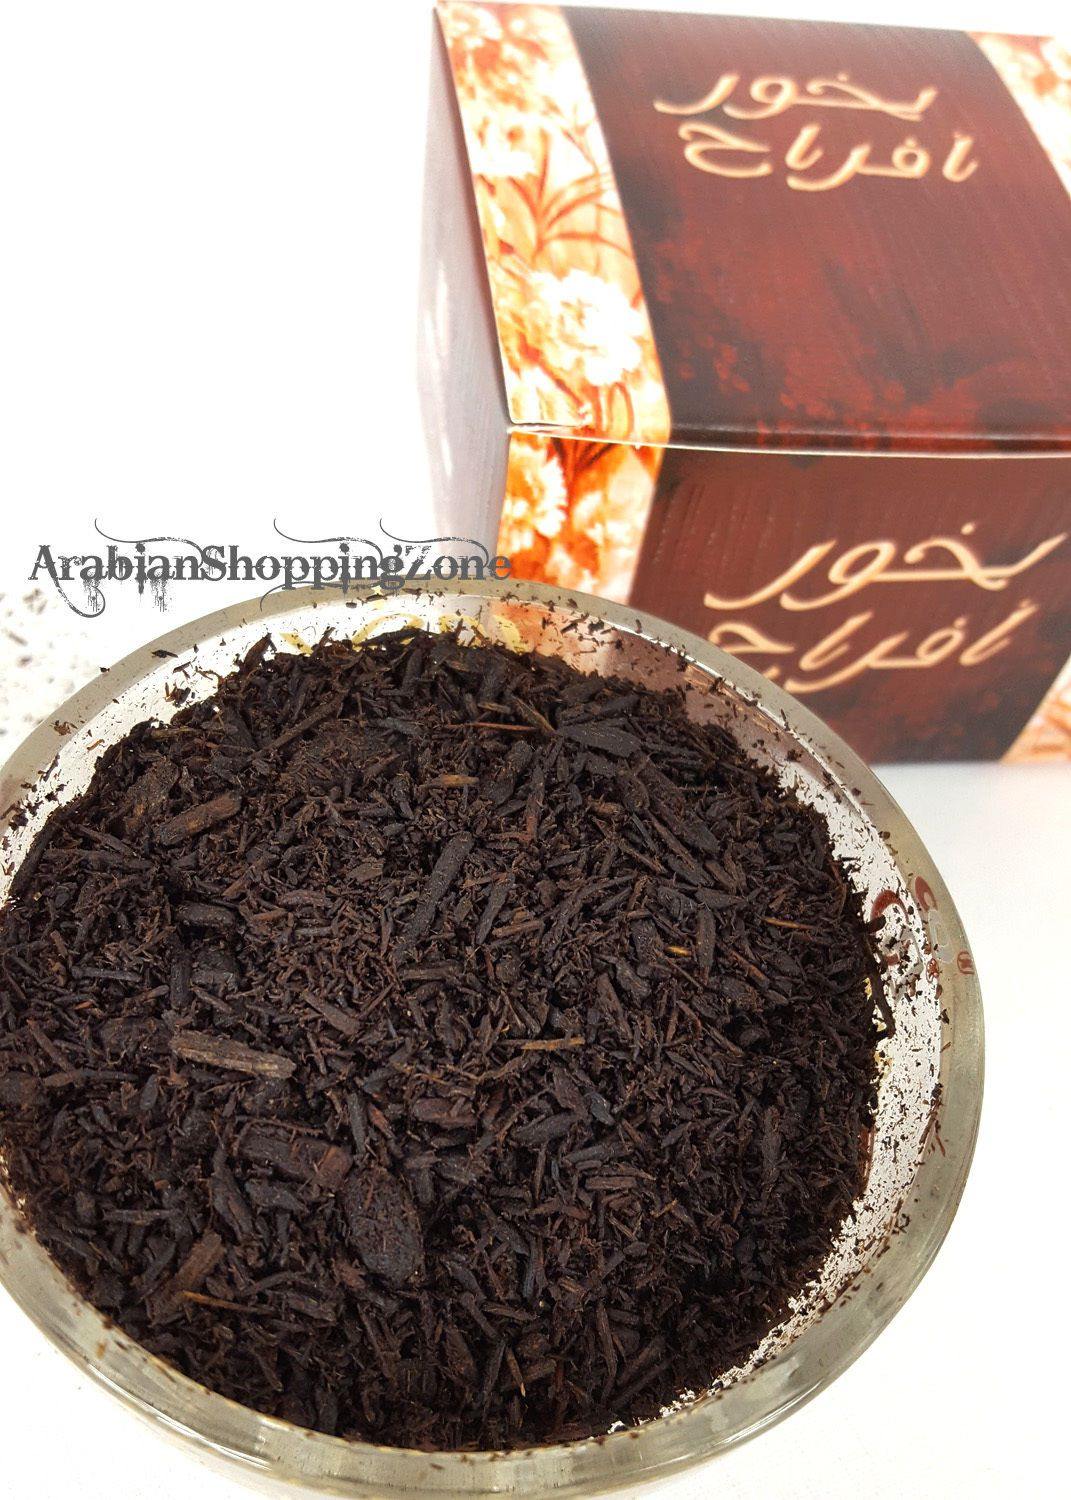 Banafa Arabian Incense High Quality Burning BAKHOOR Fragrance بخور بانافع - Arabian Shopping Zone